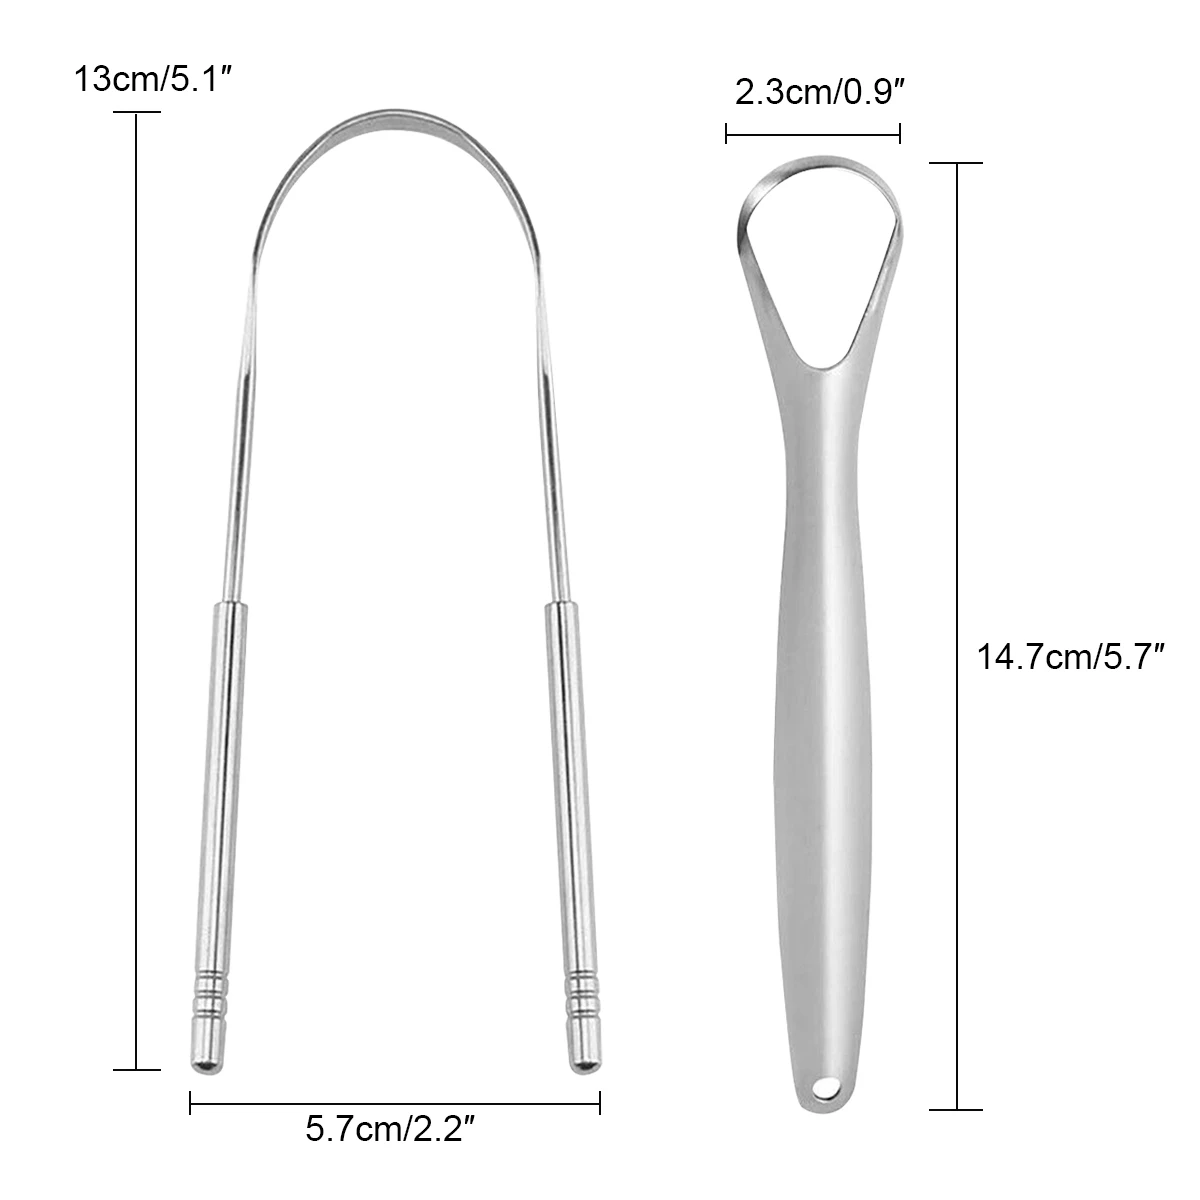 Stainless Steel Dental Tool Set Tongue Scraper Oral Care